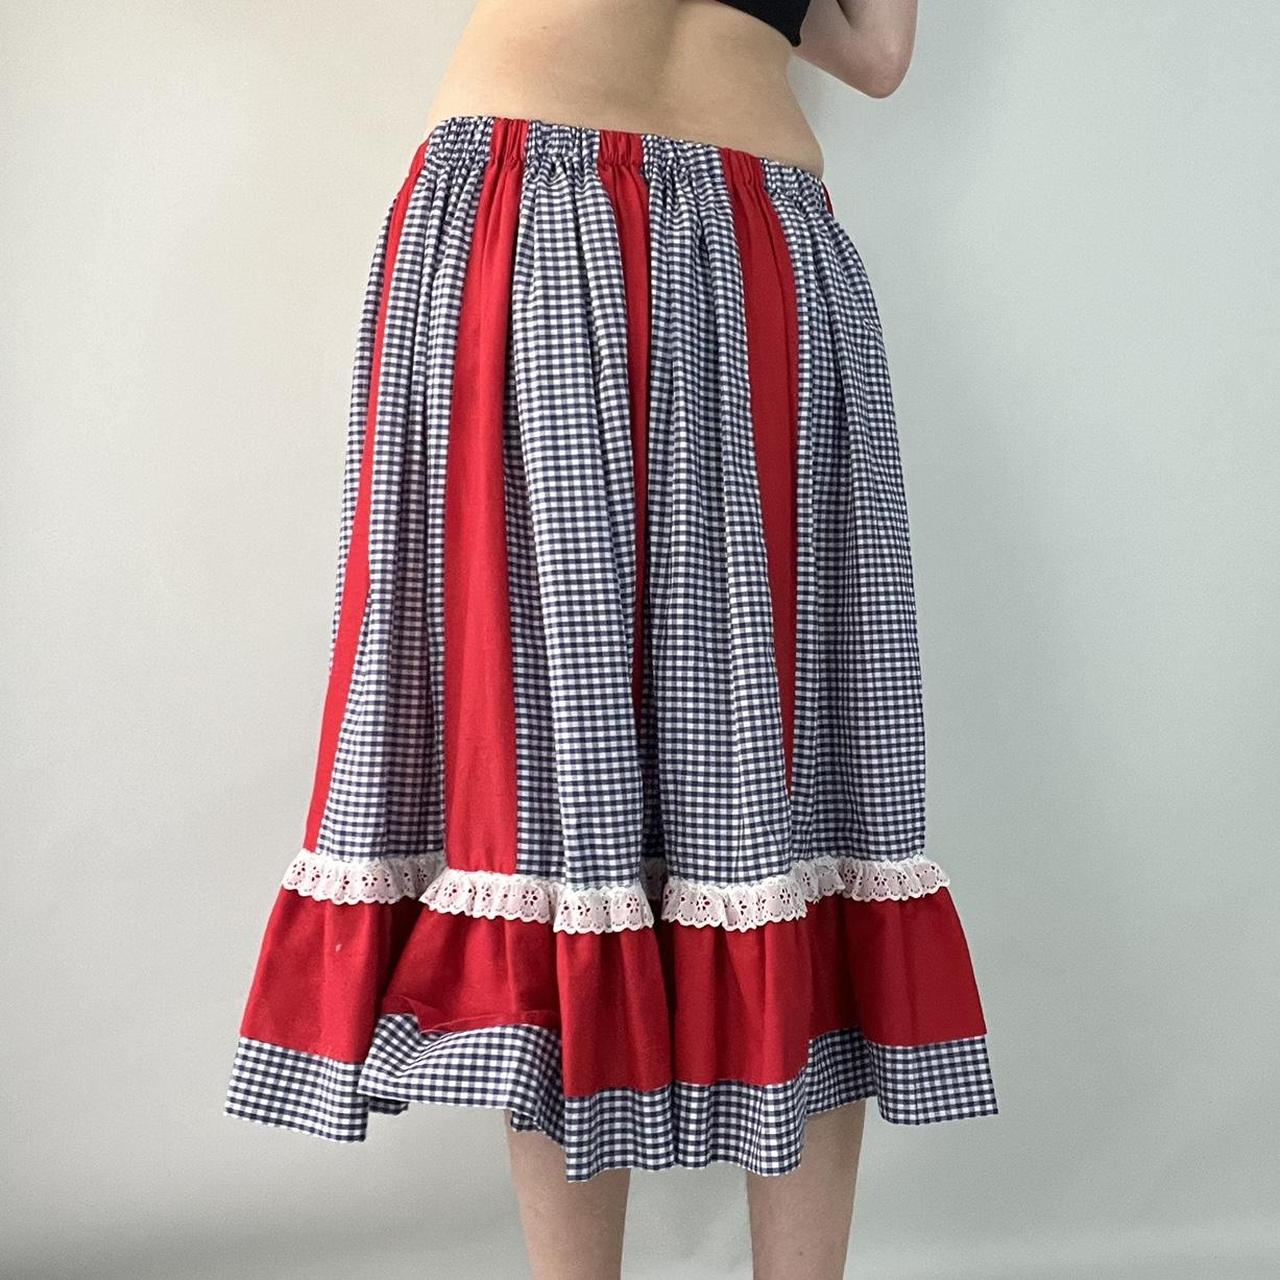 Women's Red and Blue Skirt | Depop